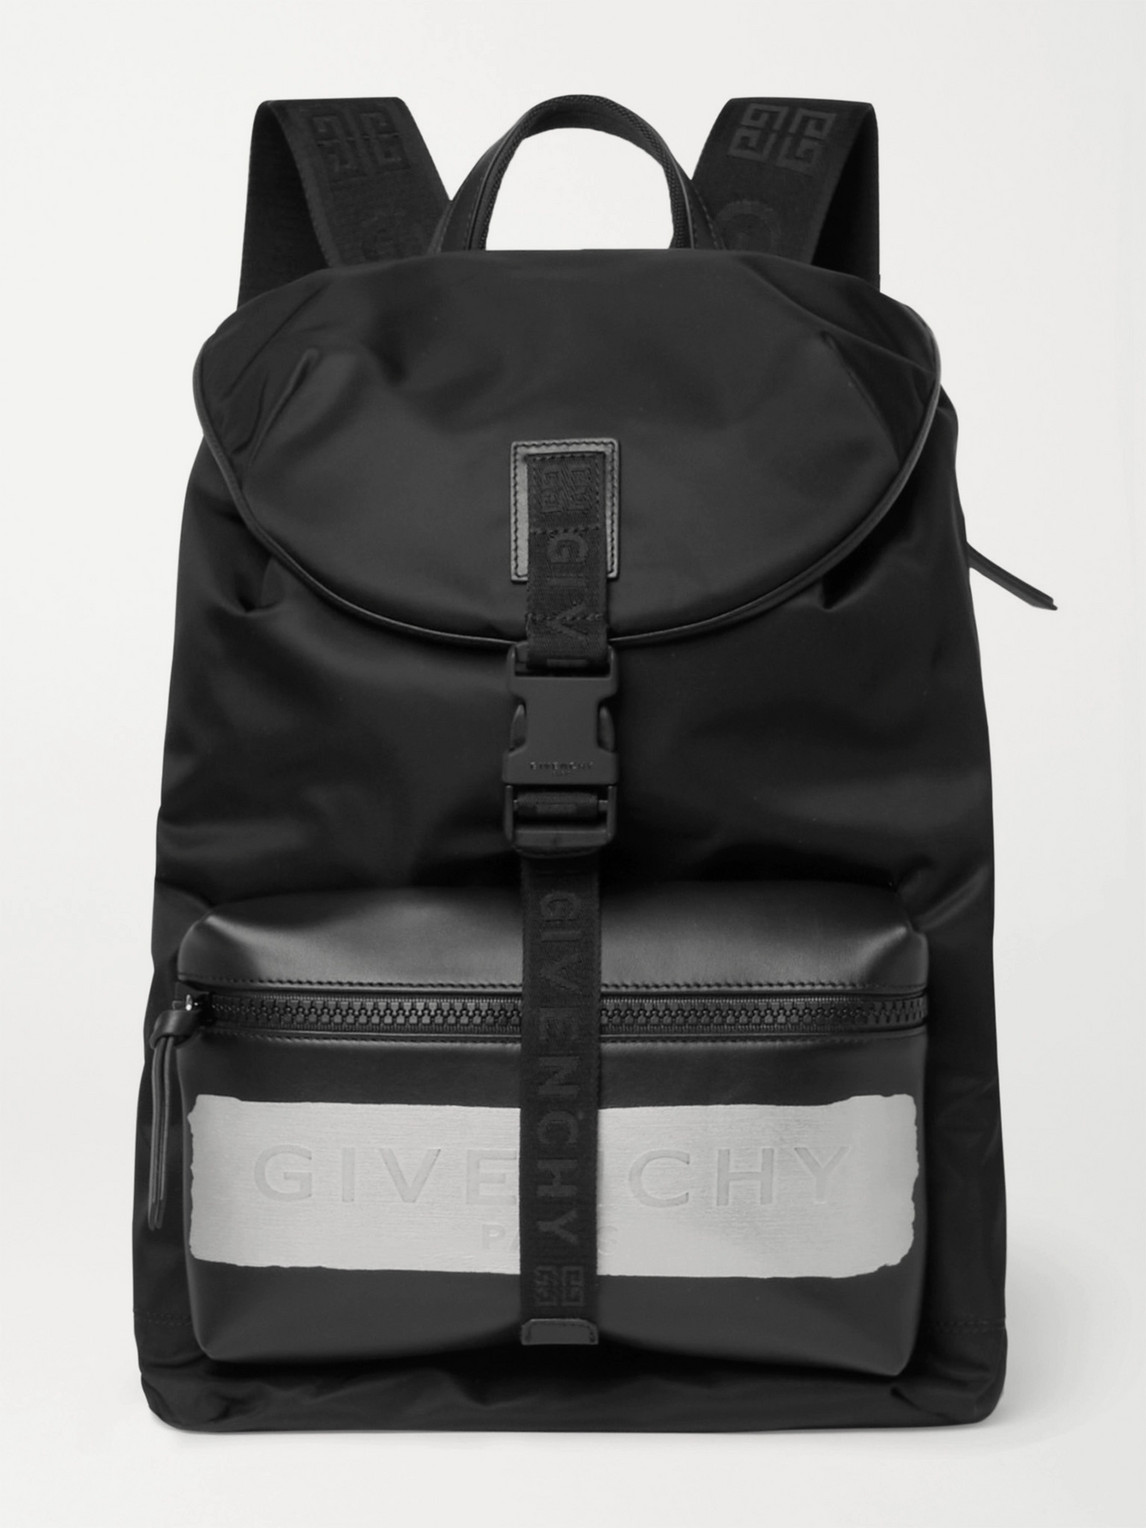 Givenchy Black Light 3 Backpack In Black/silver